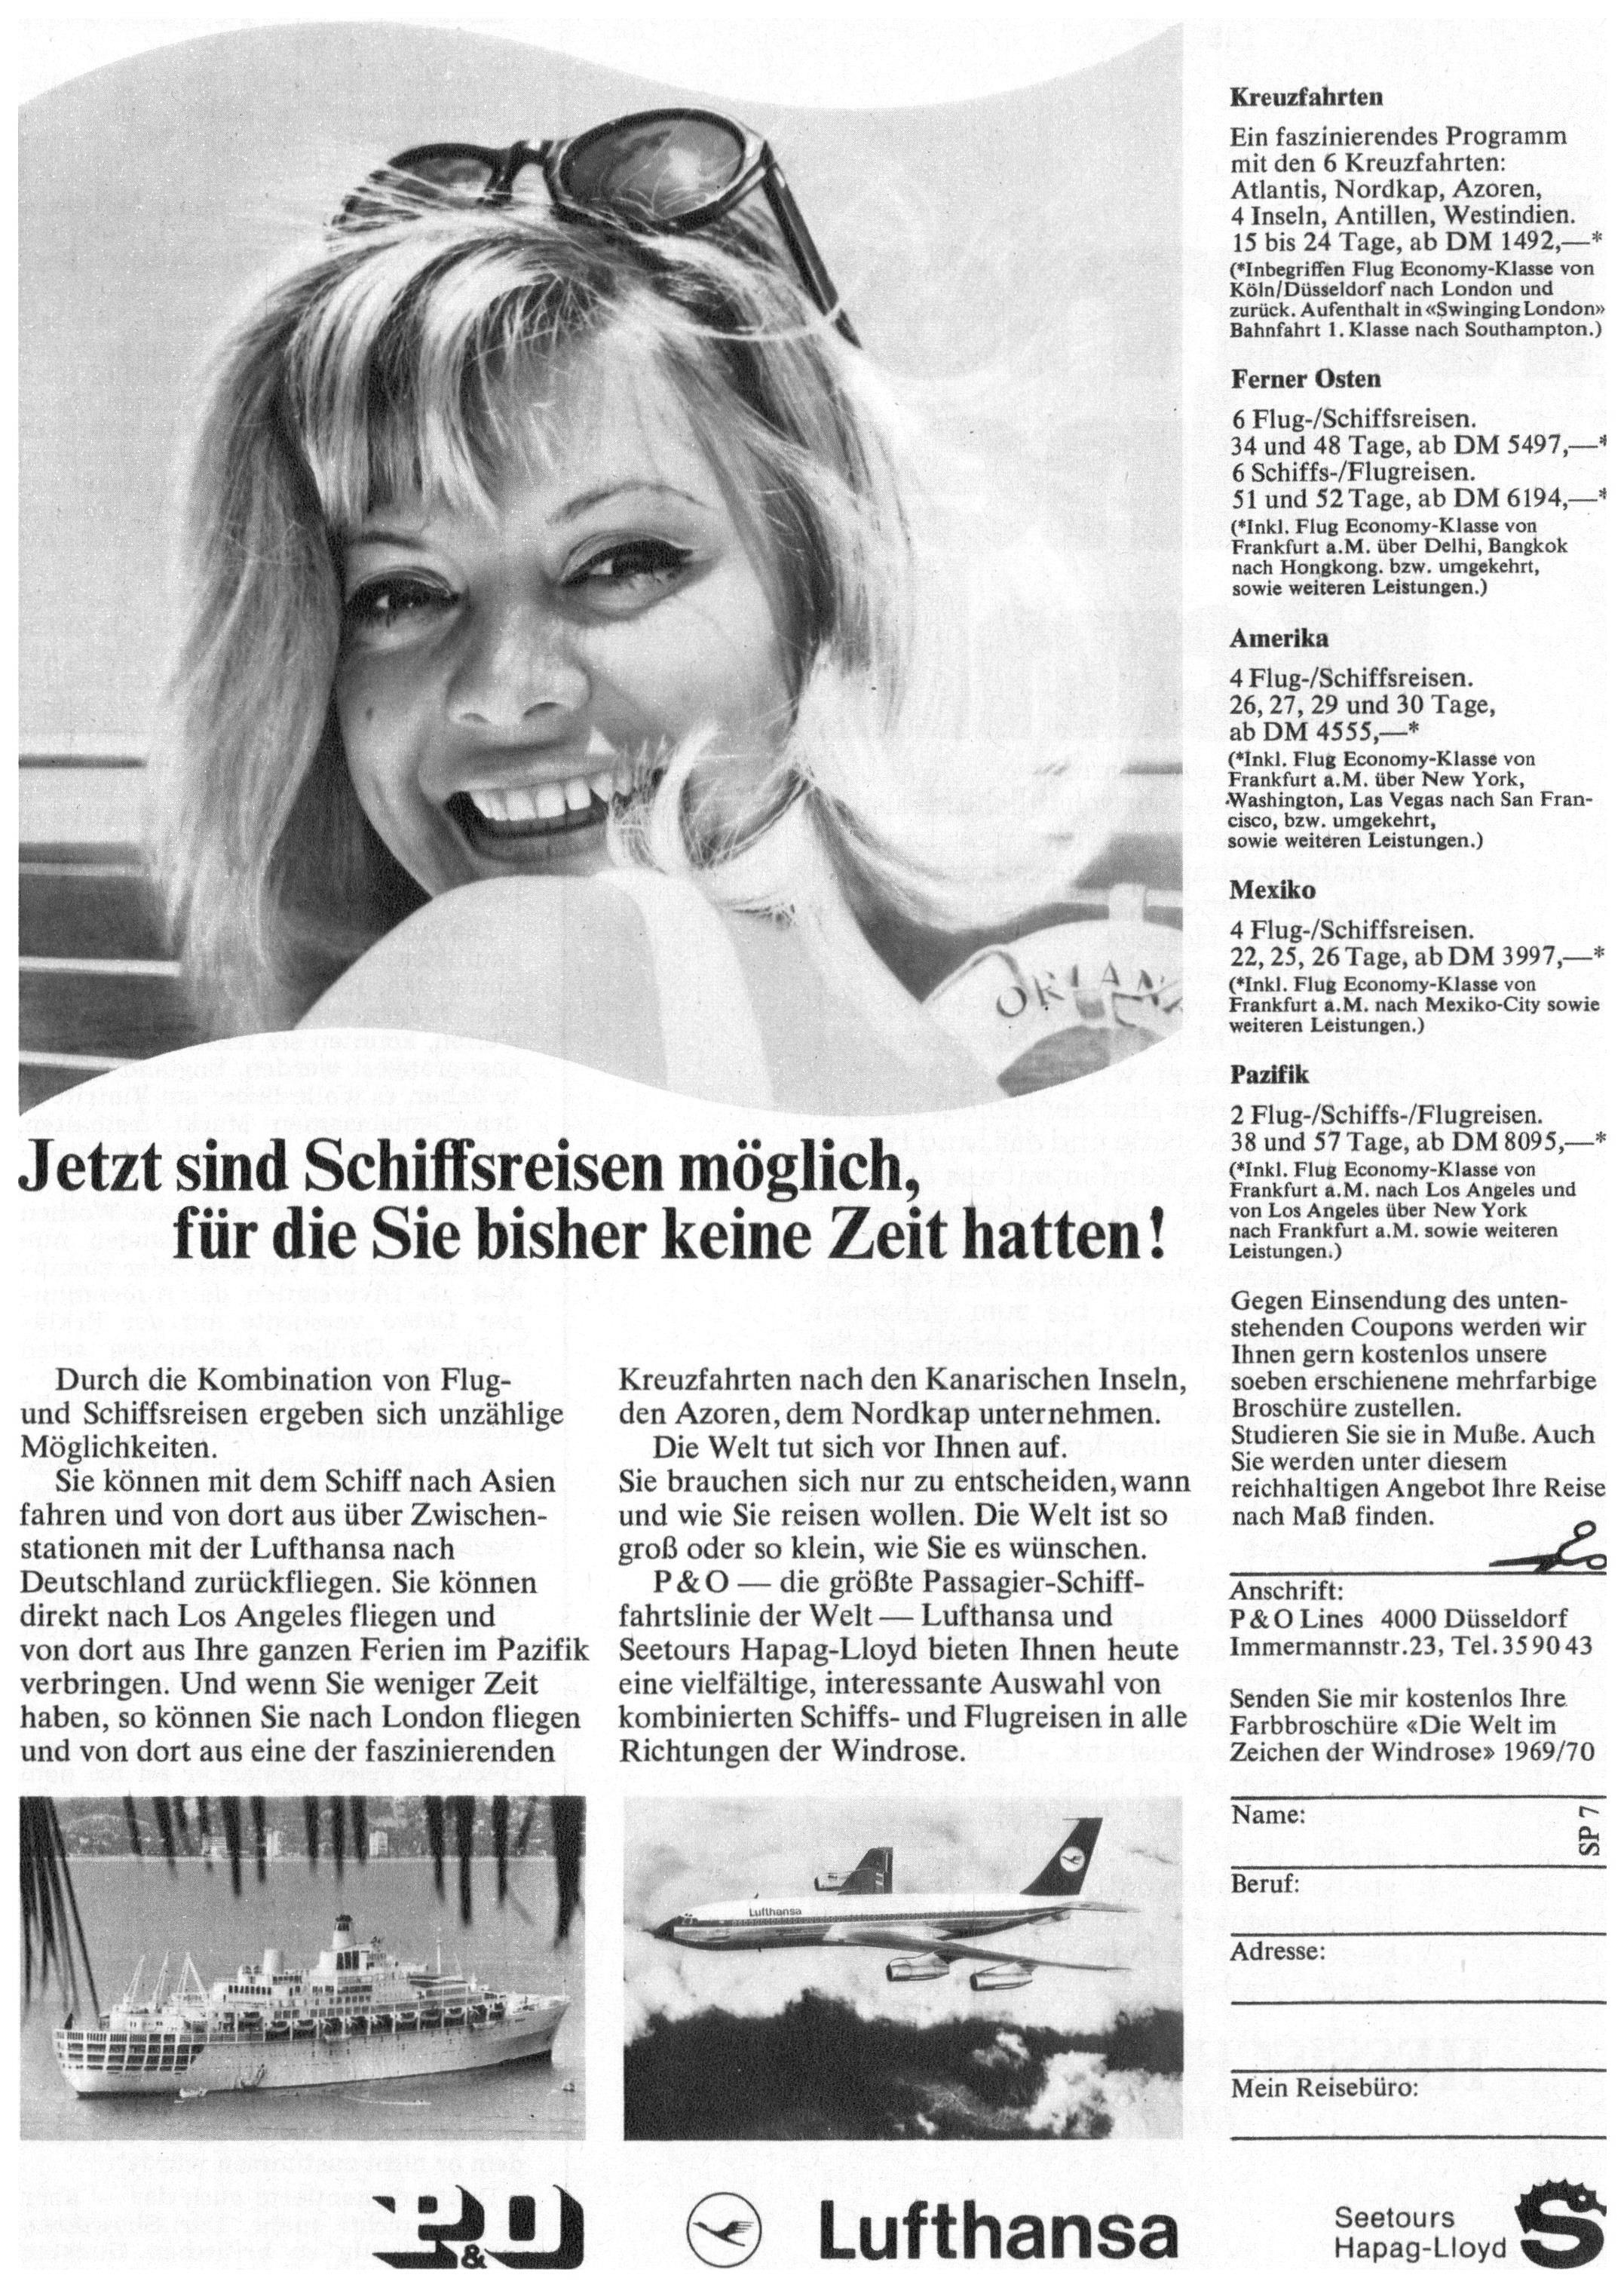 Lufthansa 1969 0.jpg